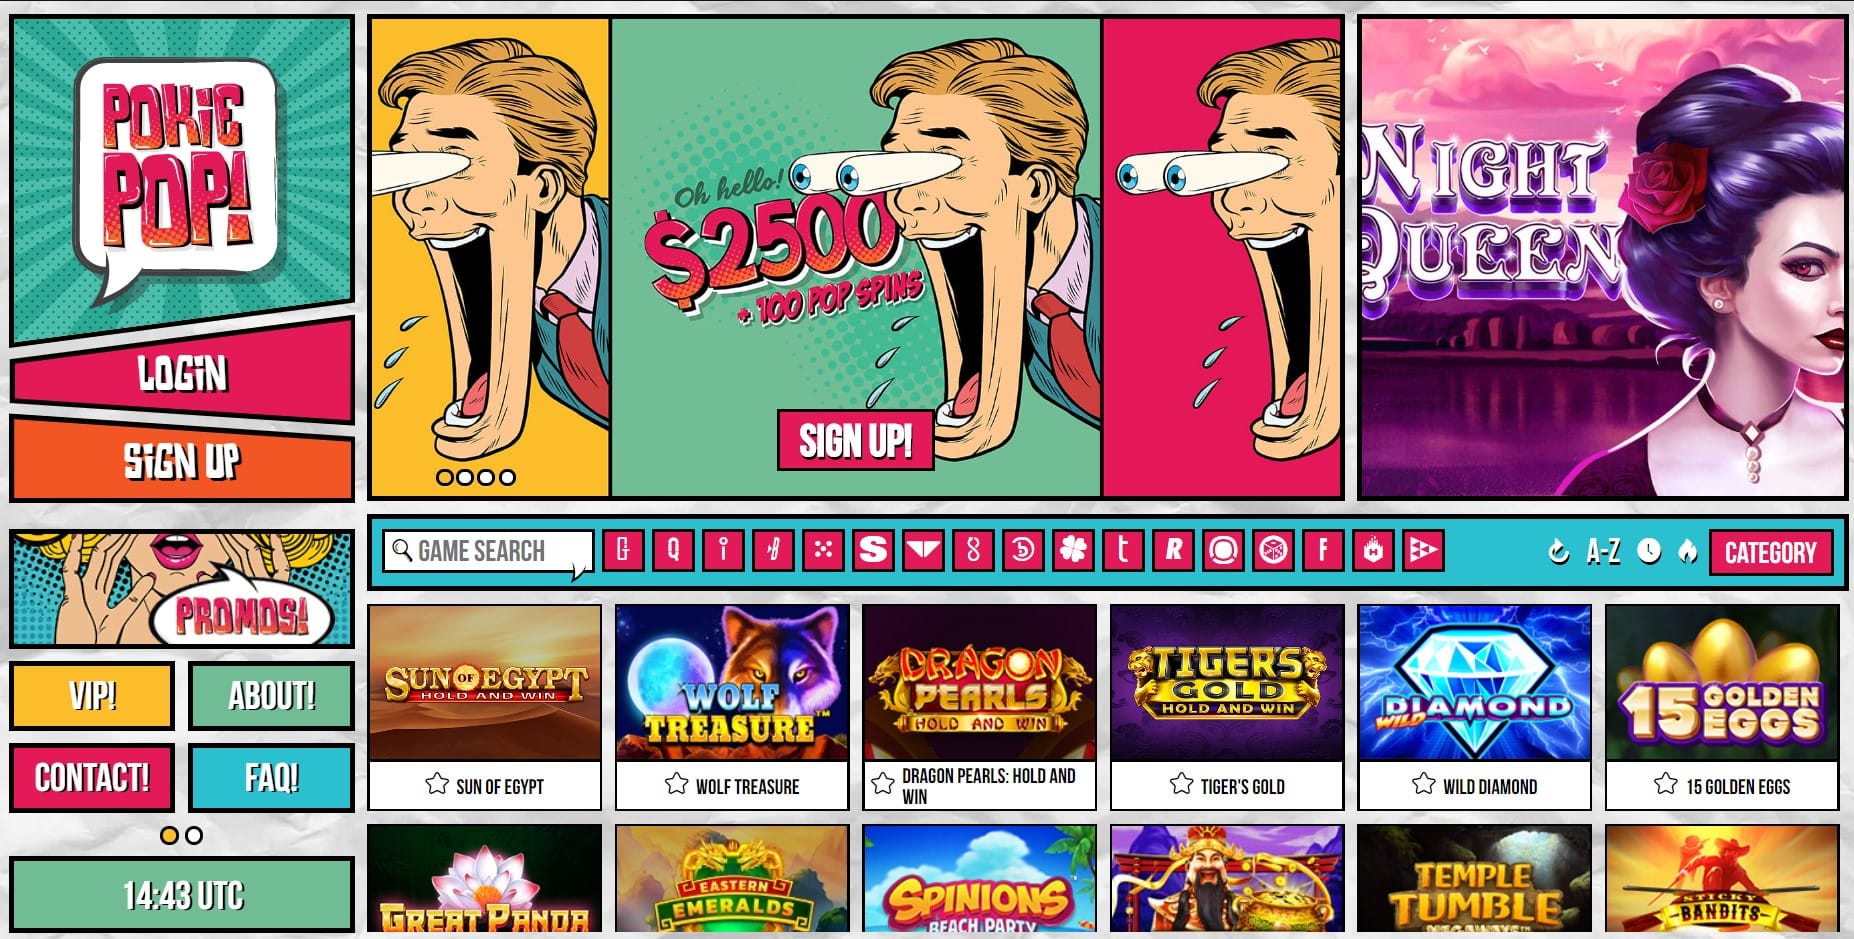 pokiepop casino homepage